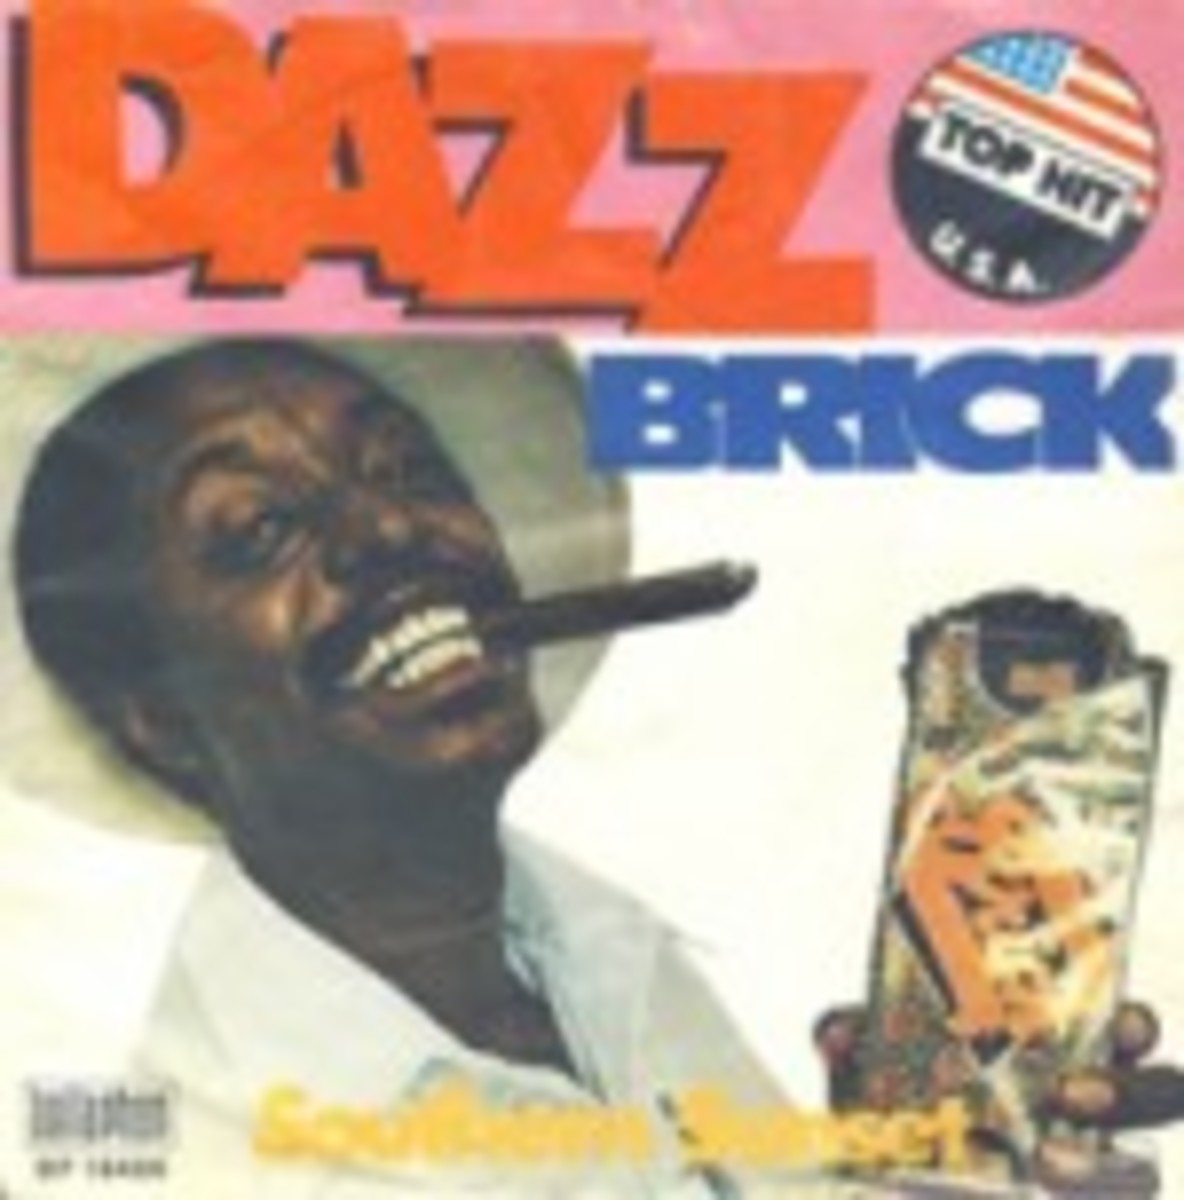 Dazz Brick